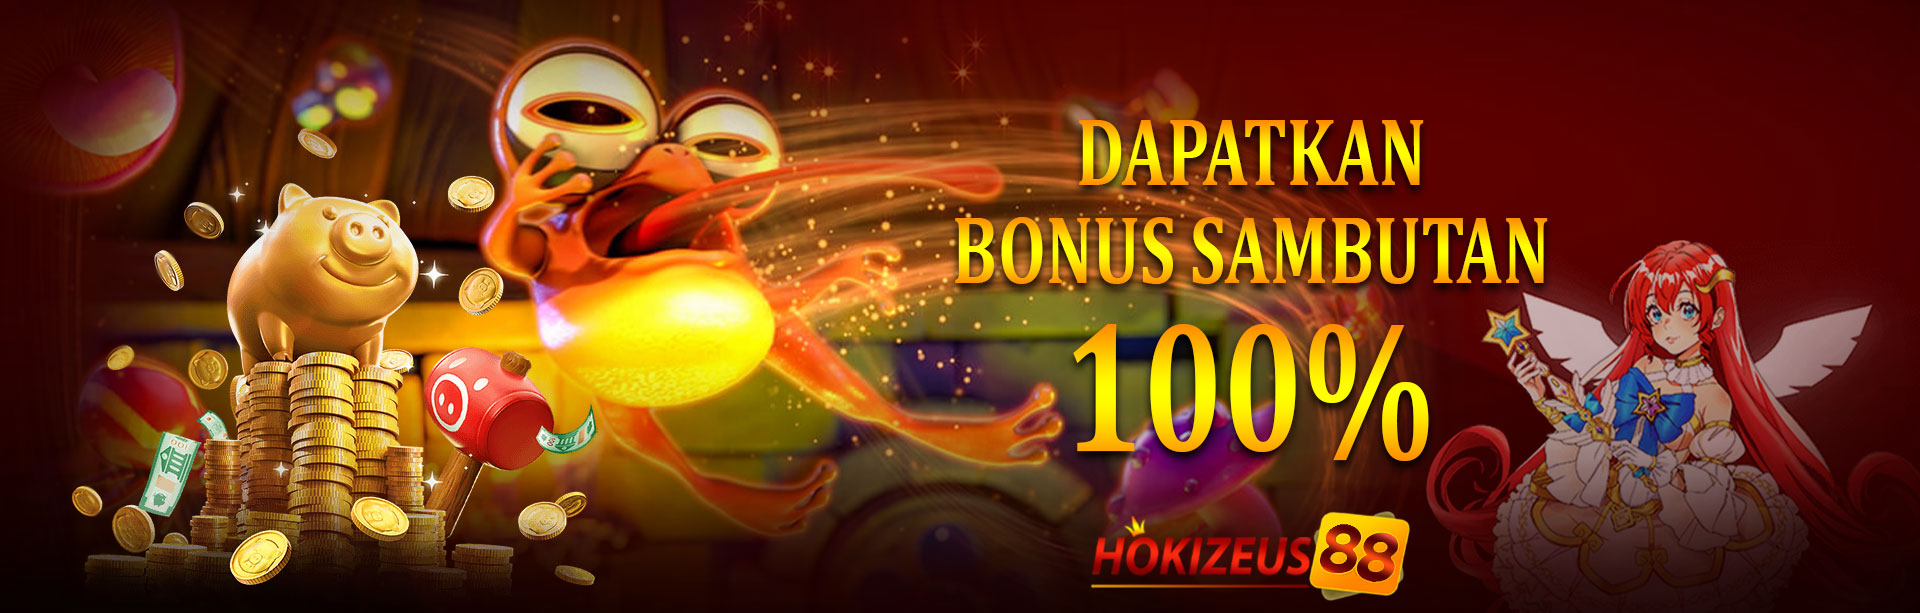 Bonus Welcome 100%